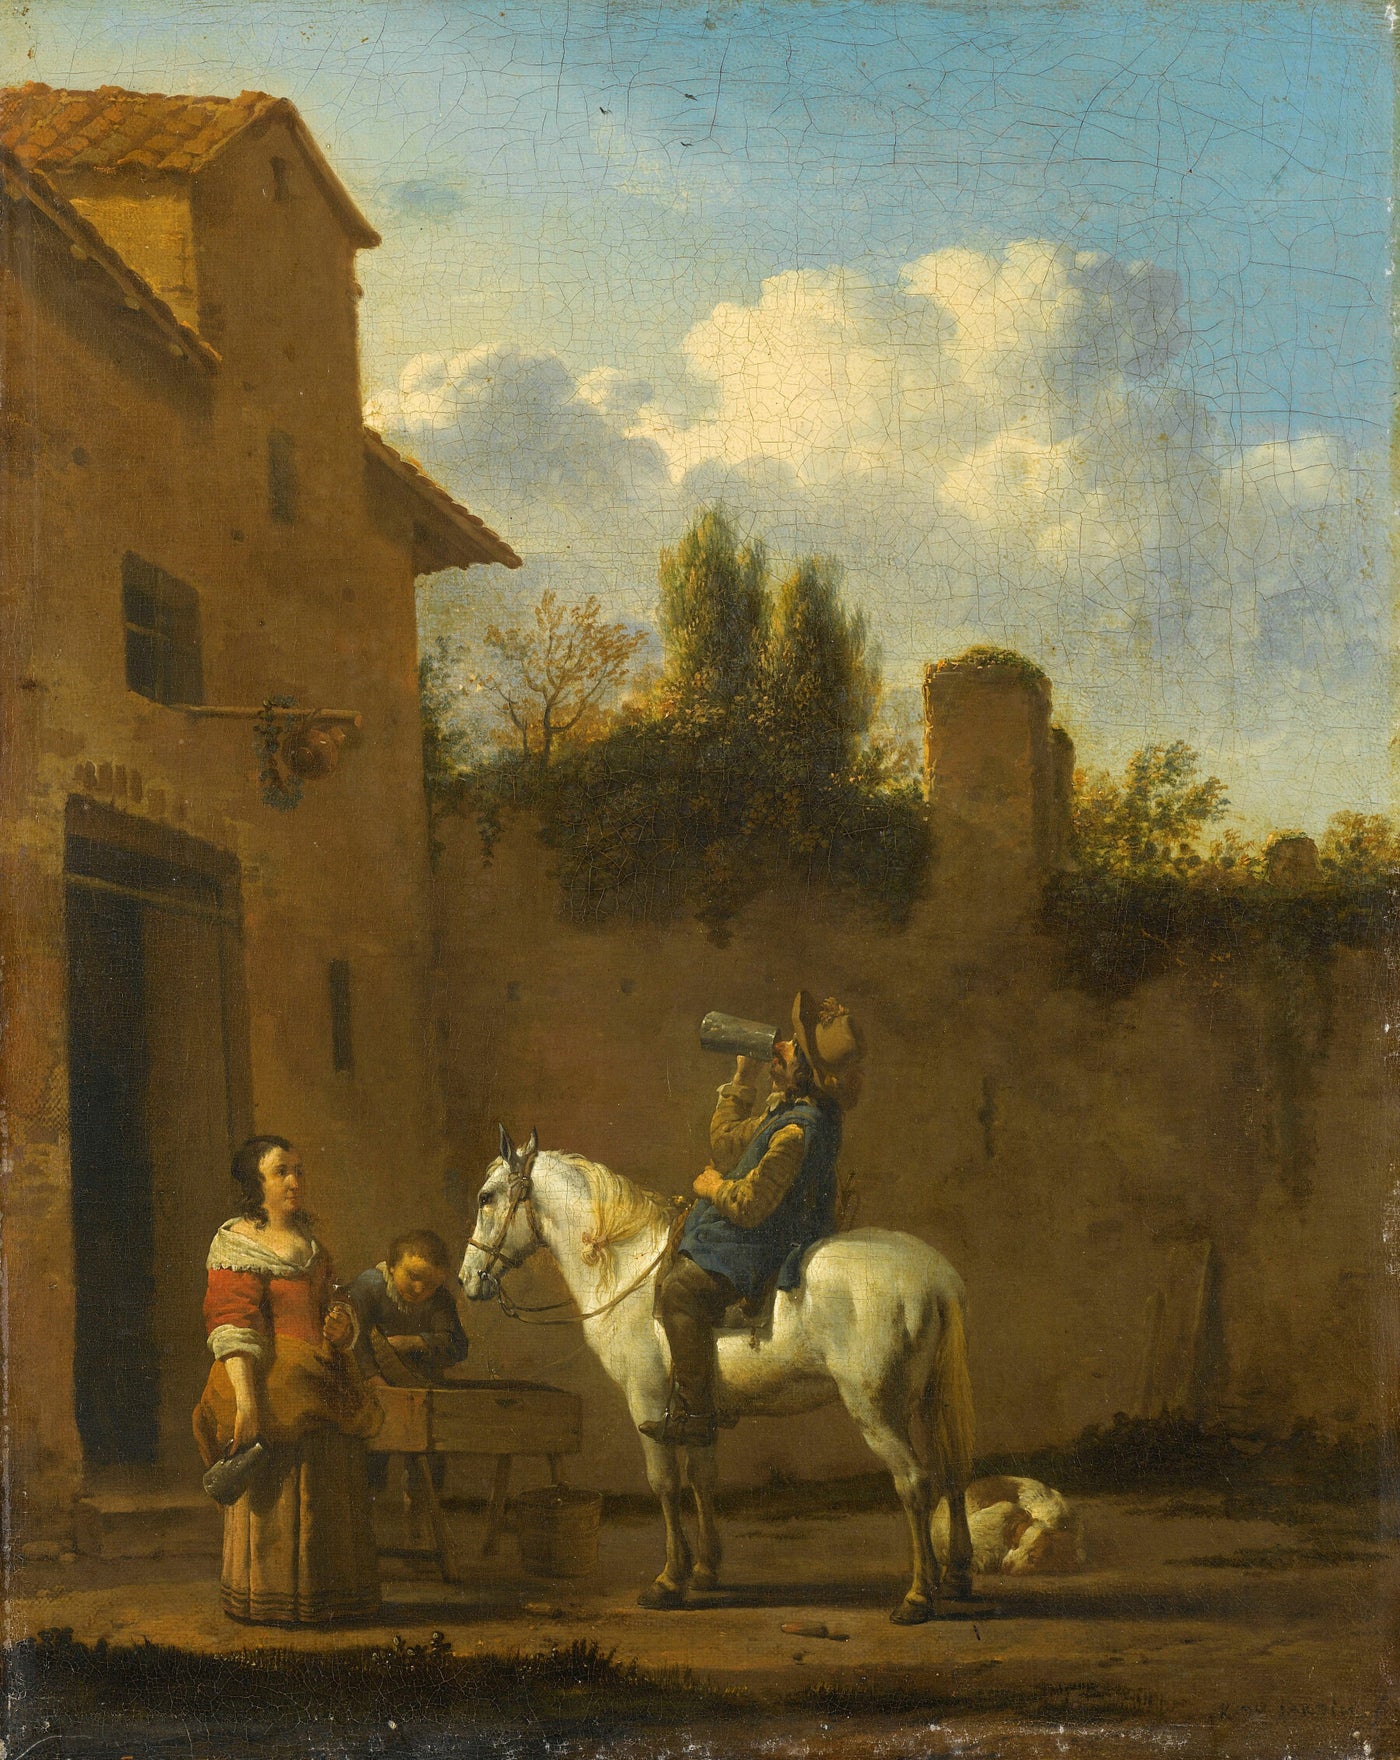 Trinkender Trompeter zu Pferd, Karel du Jardin, 1650 - 1660